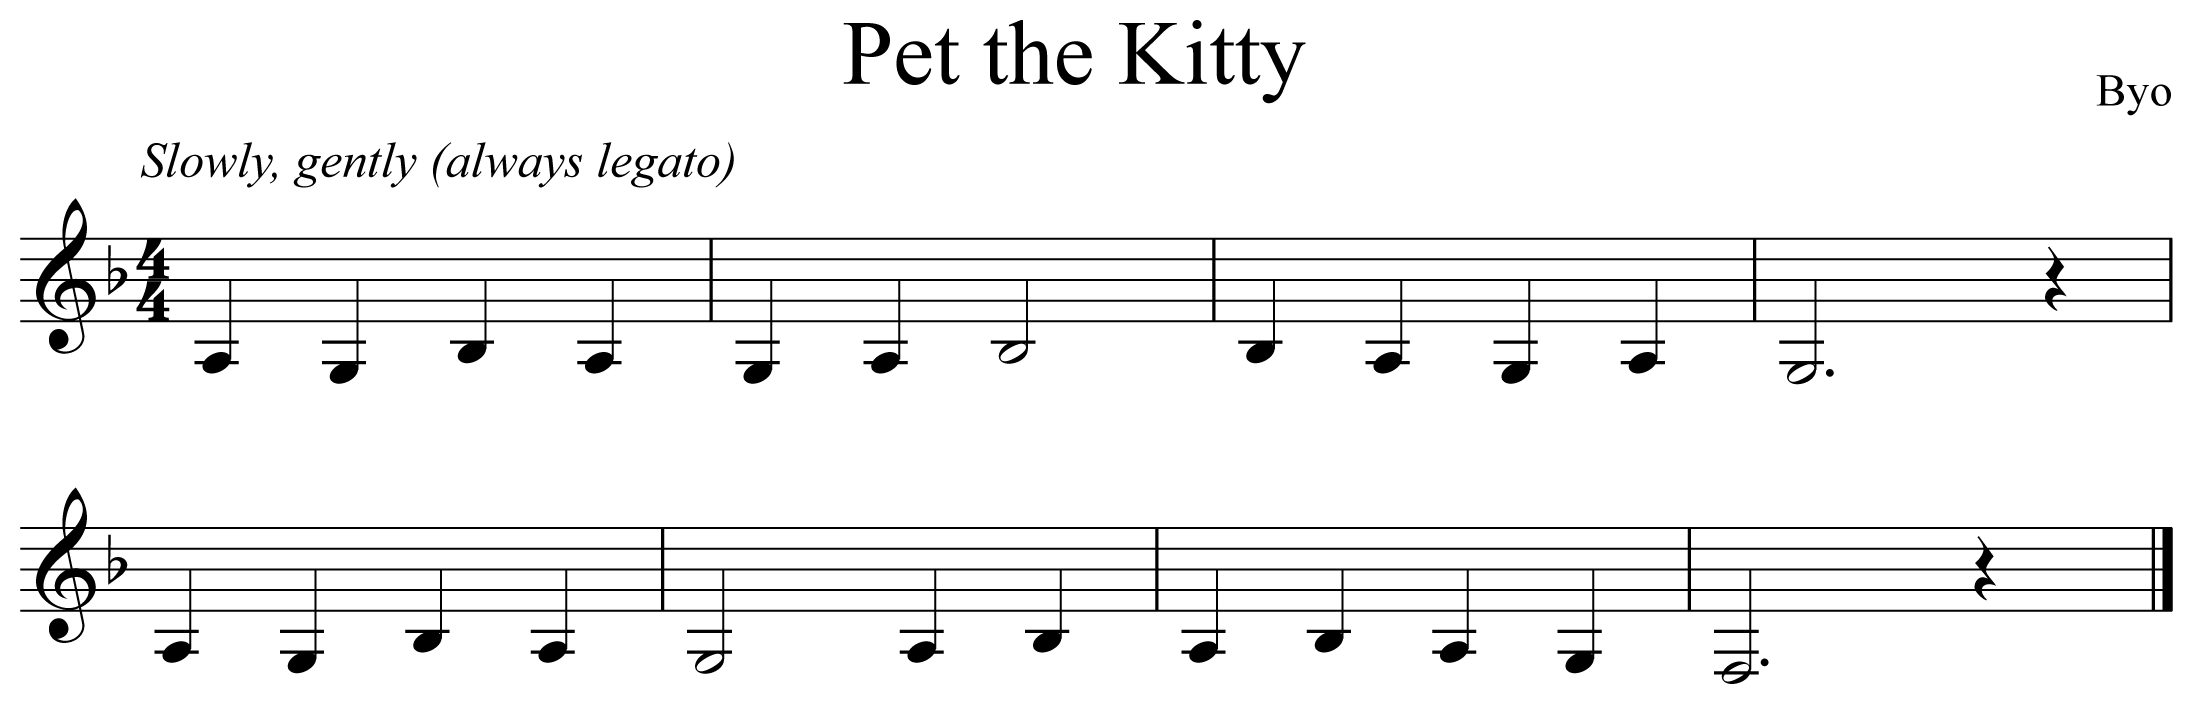 Pet the Kitty Music Notation Clarinet